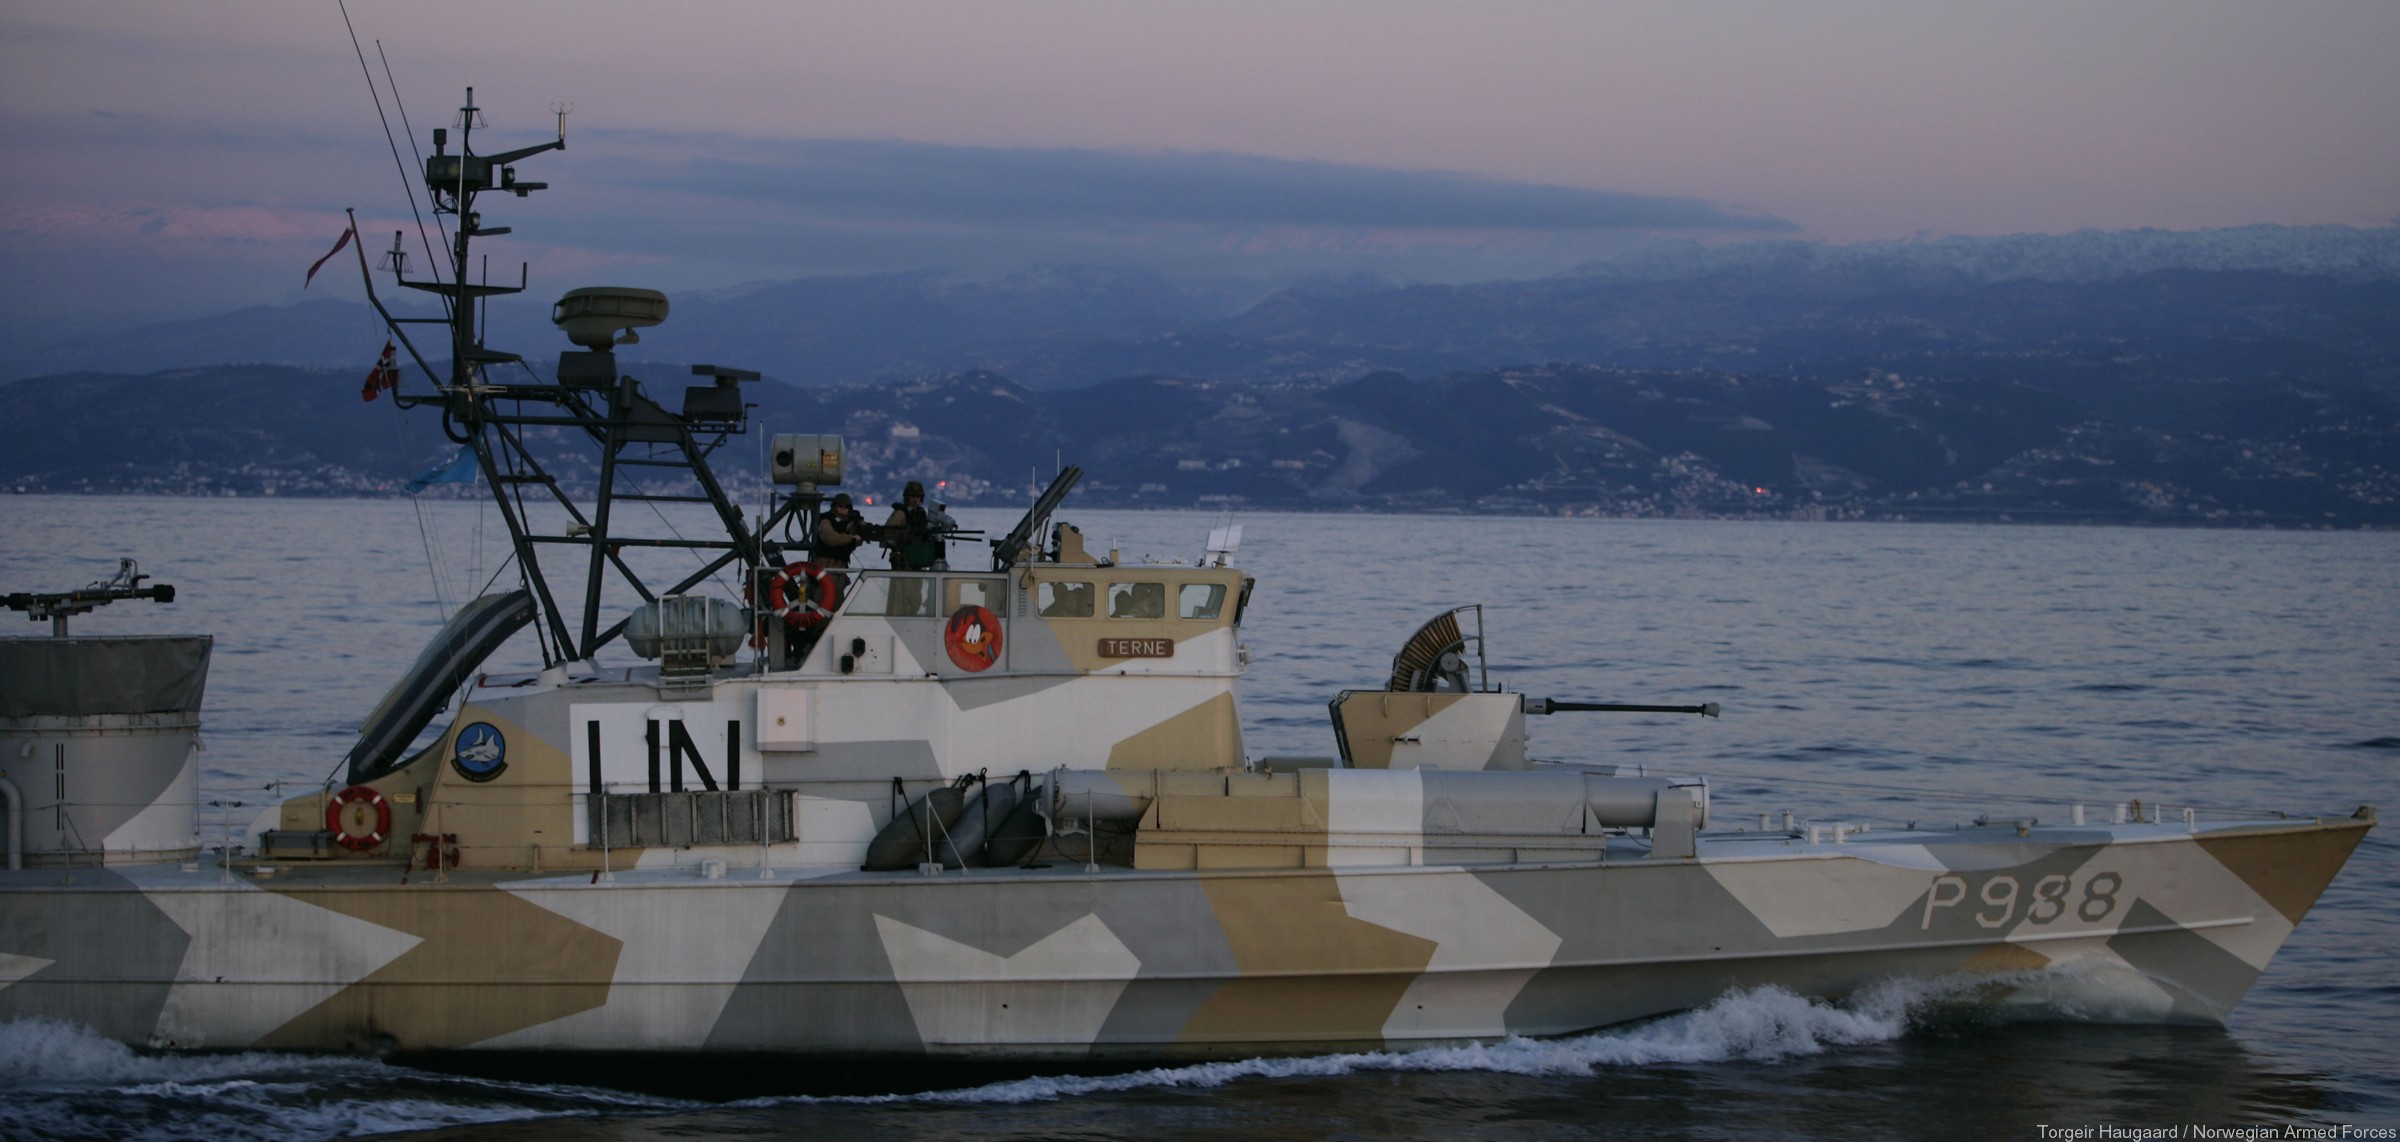 p-988 knm terne hauk class fast attack missile torpedo craft boat norwegian navy sjøforsvaret 16